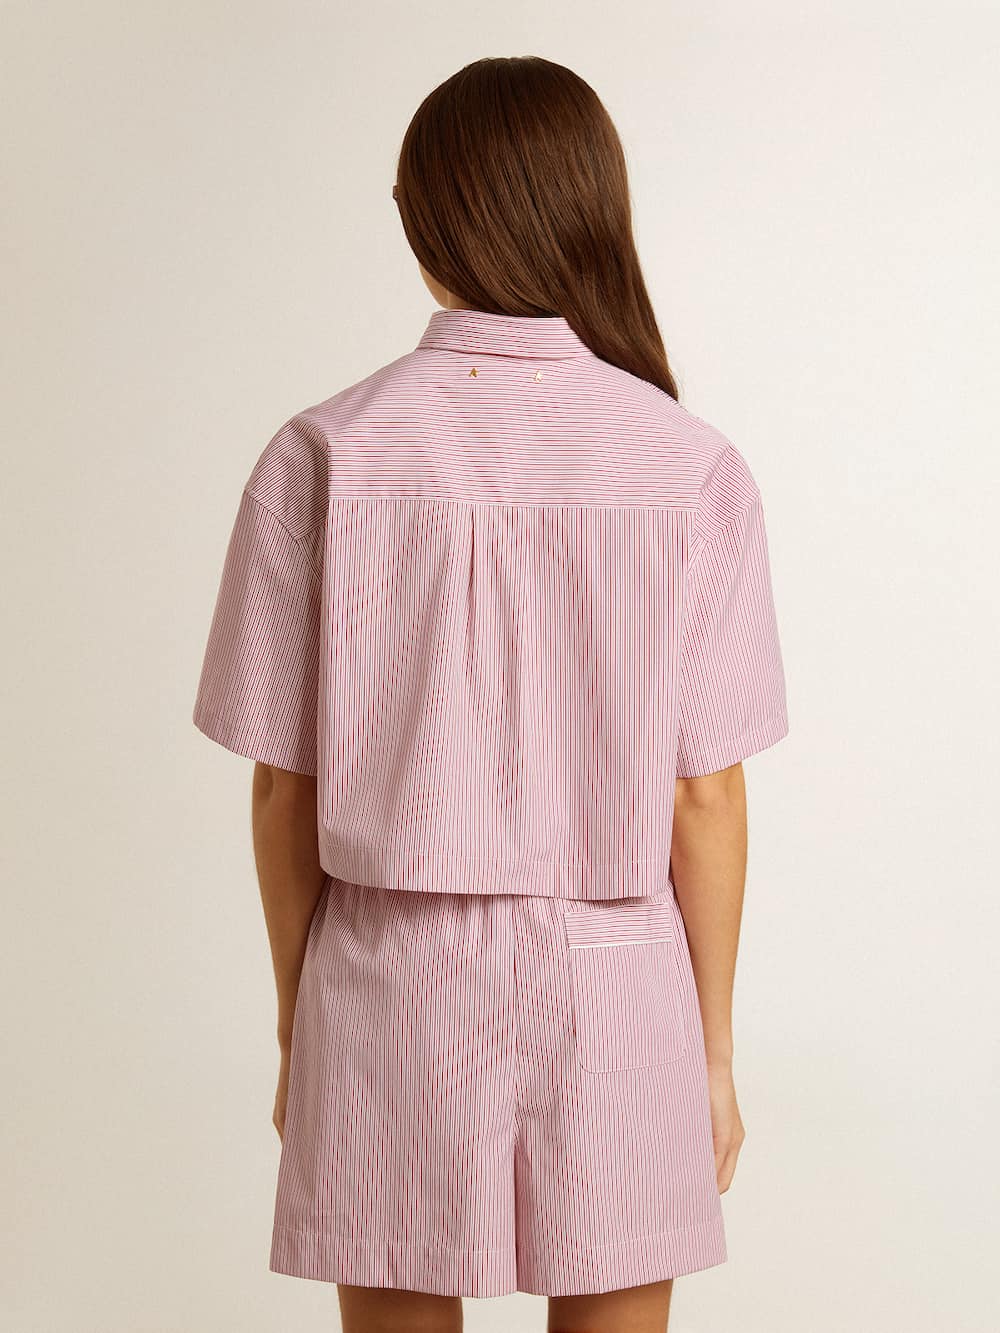 Golden Goose - Women's cropped shirt in striped cotton poplin in 